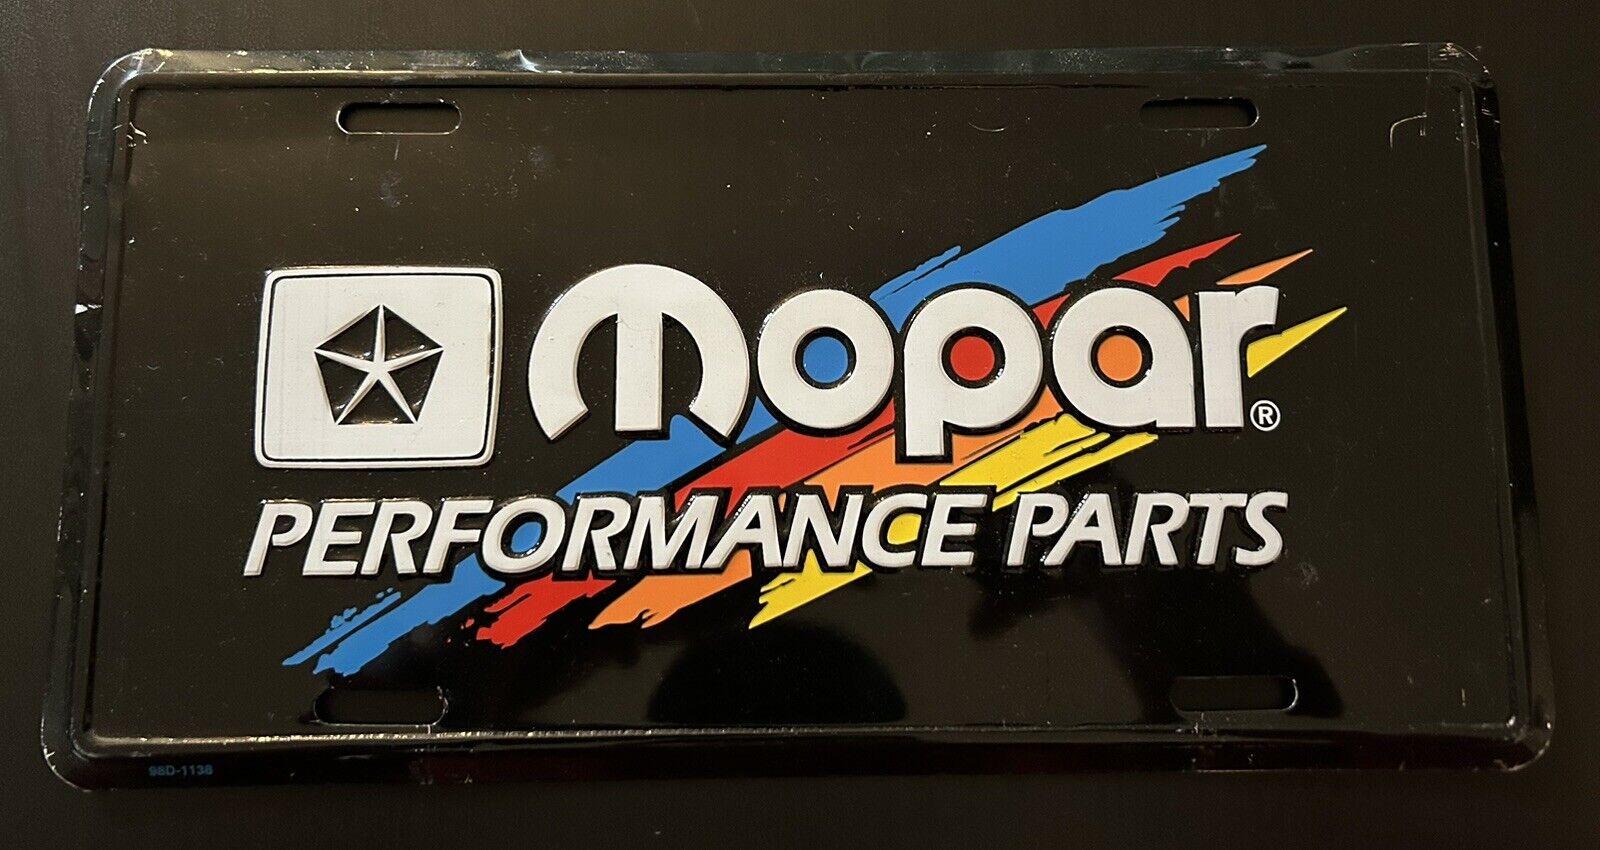 OE Mopar Performance Parts License Plate Booster 1970s 1980s Vintage Dealership